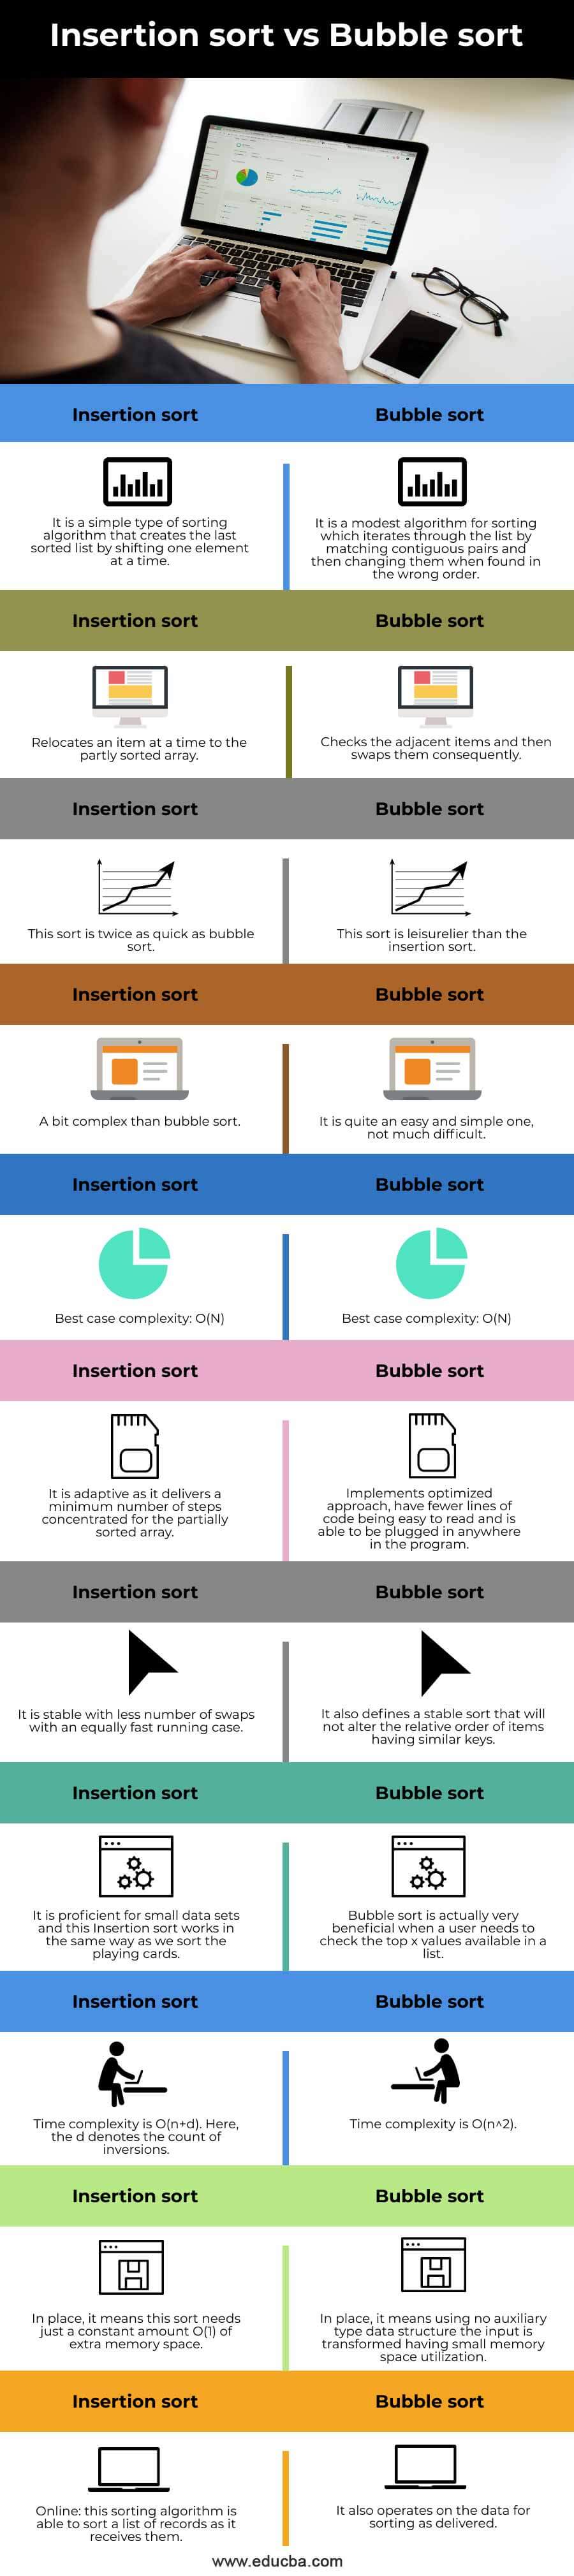 Insertion-sort-vs-Bubble-sort-info